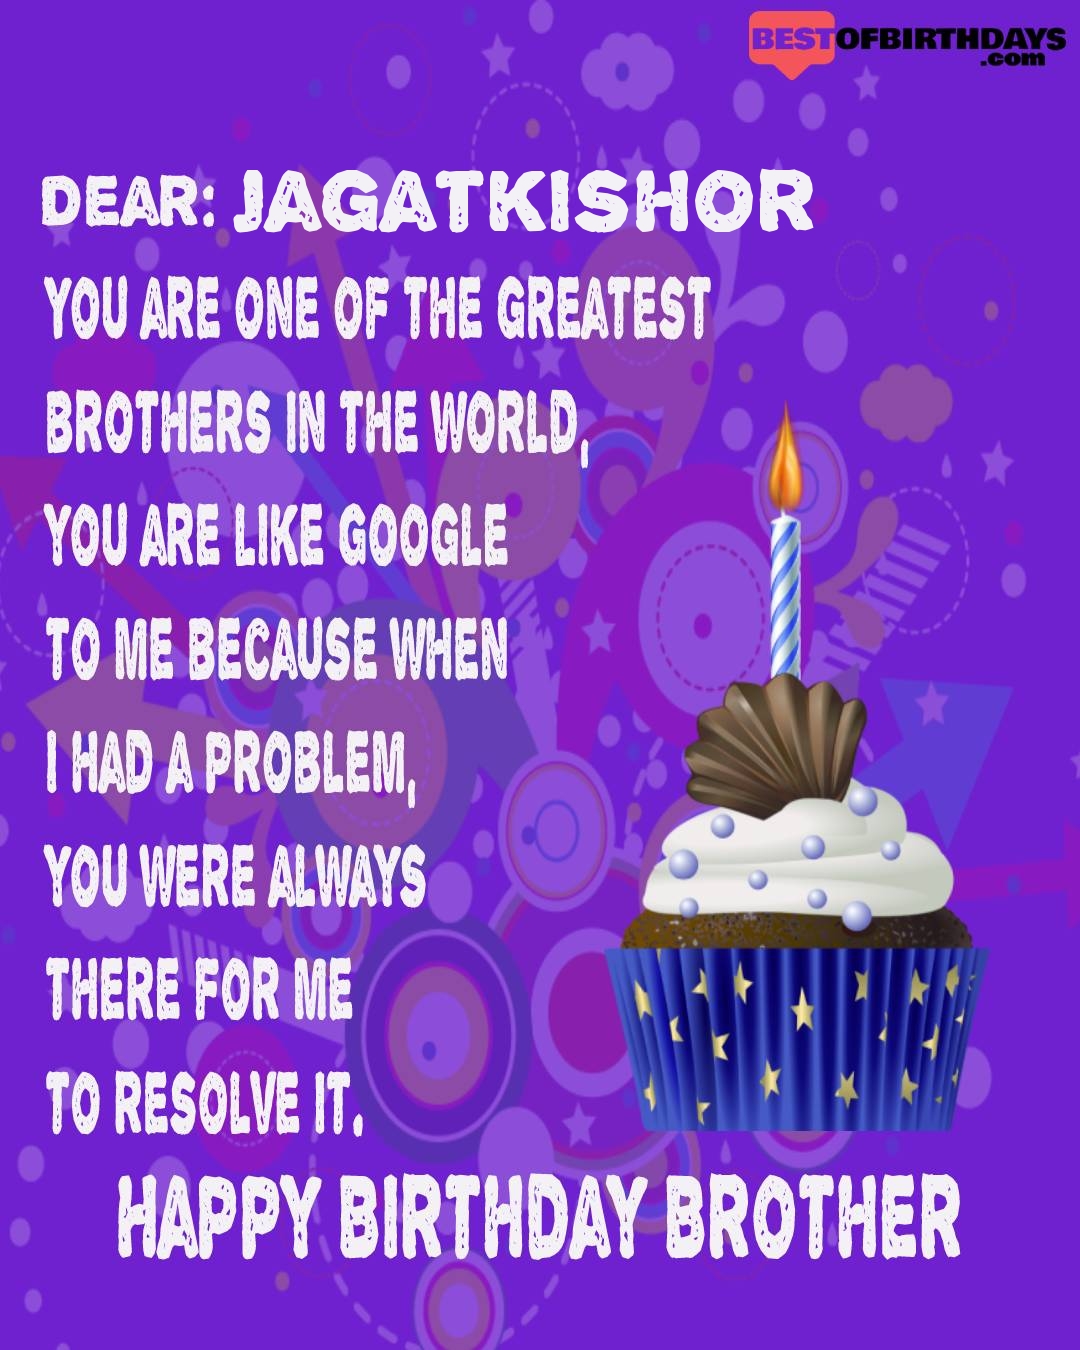 Happy birthday jagatkishor bhai brother bro